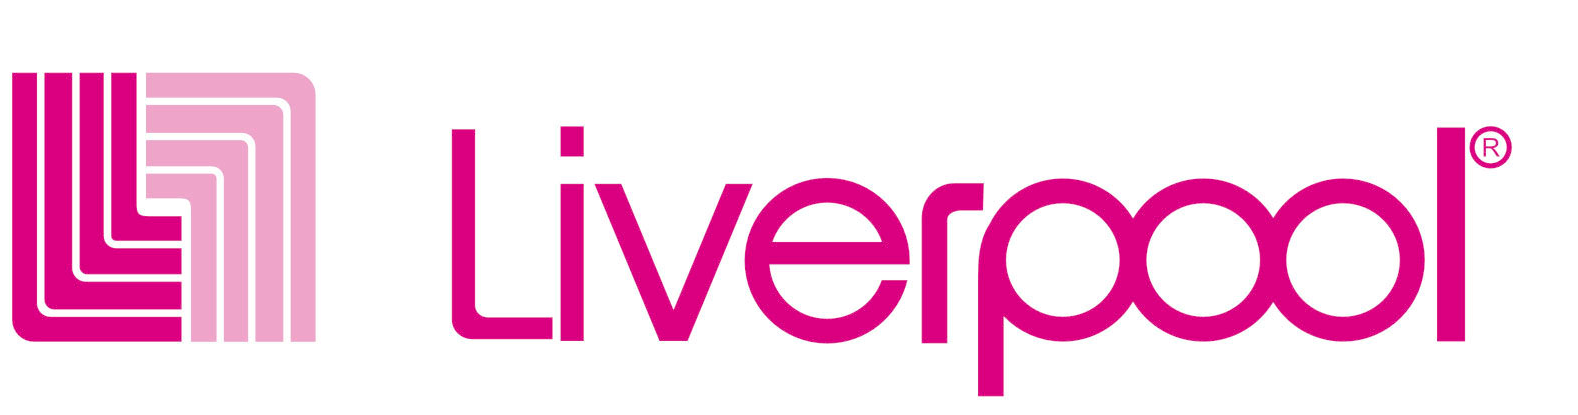 liverpool-logo.png